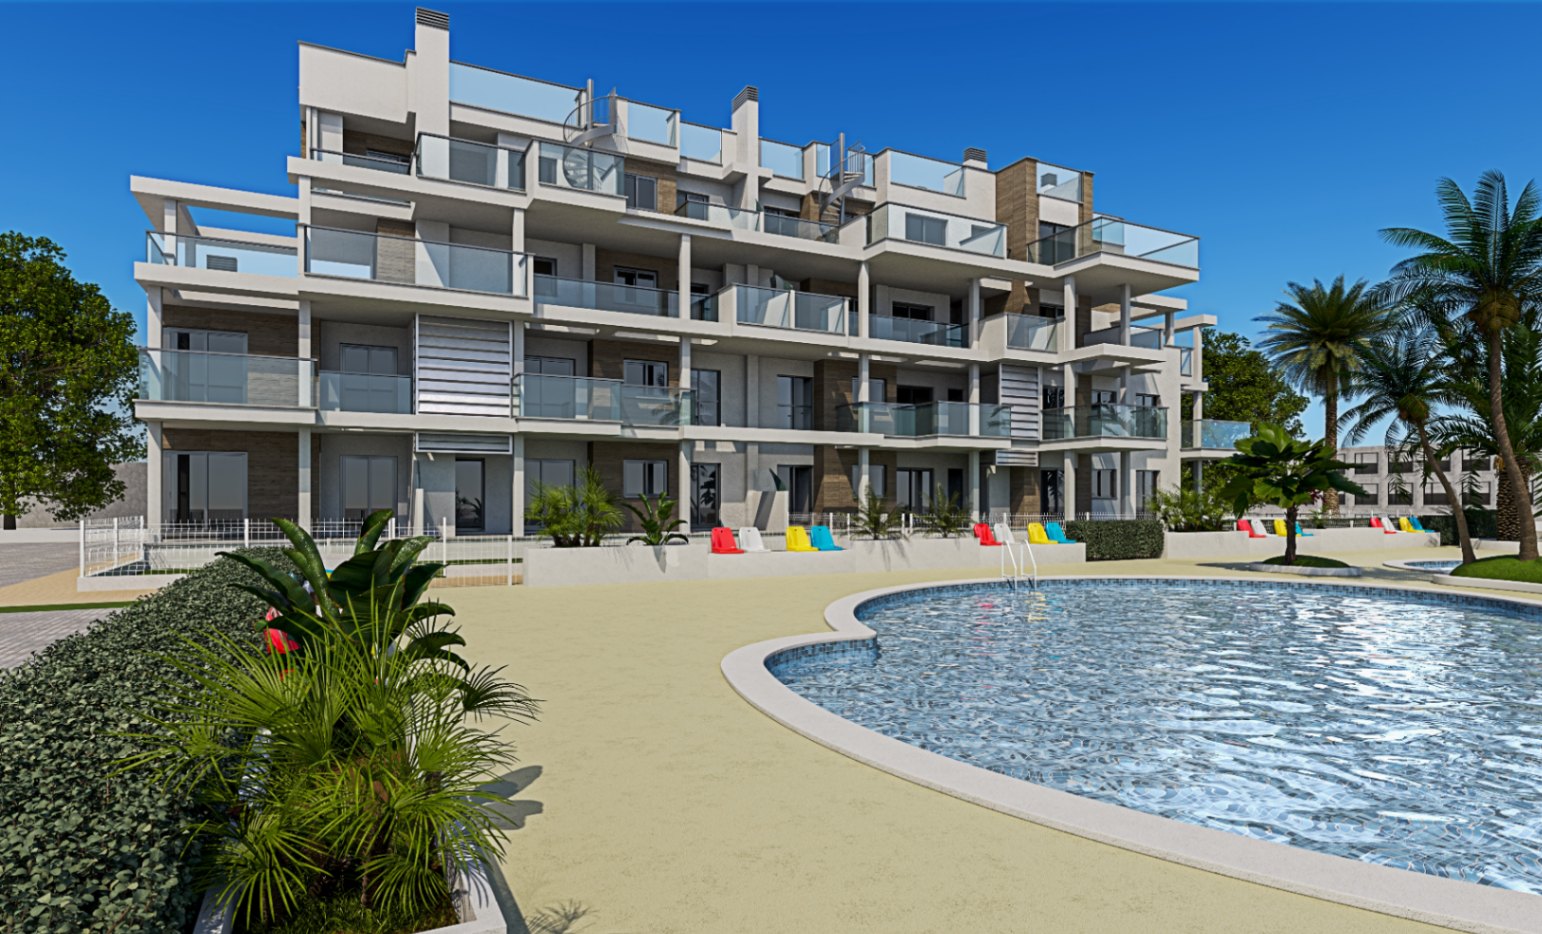 Apartamento de estilo moderno a 50m de la playa de Denia